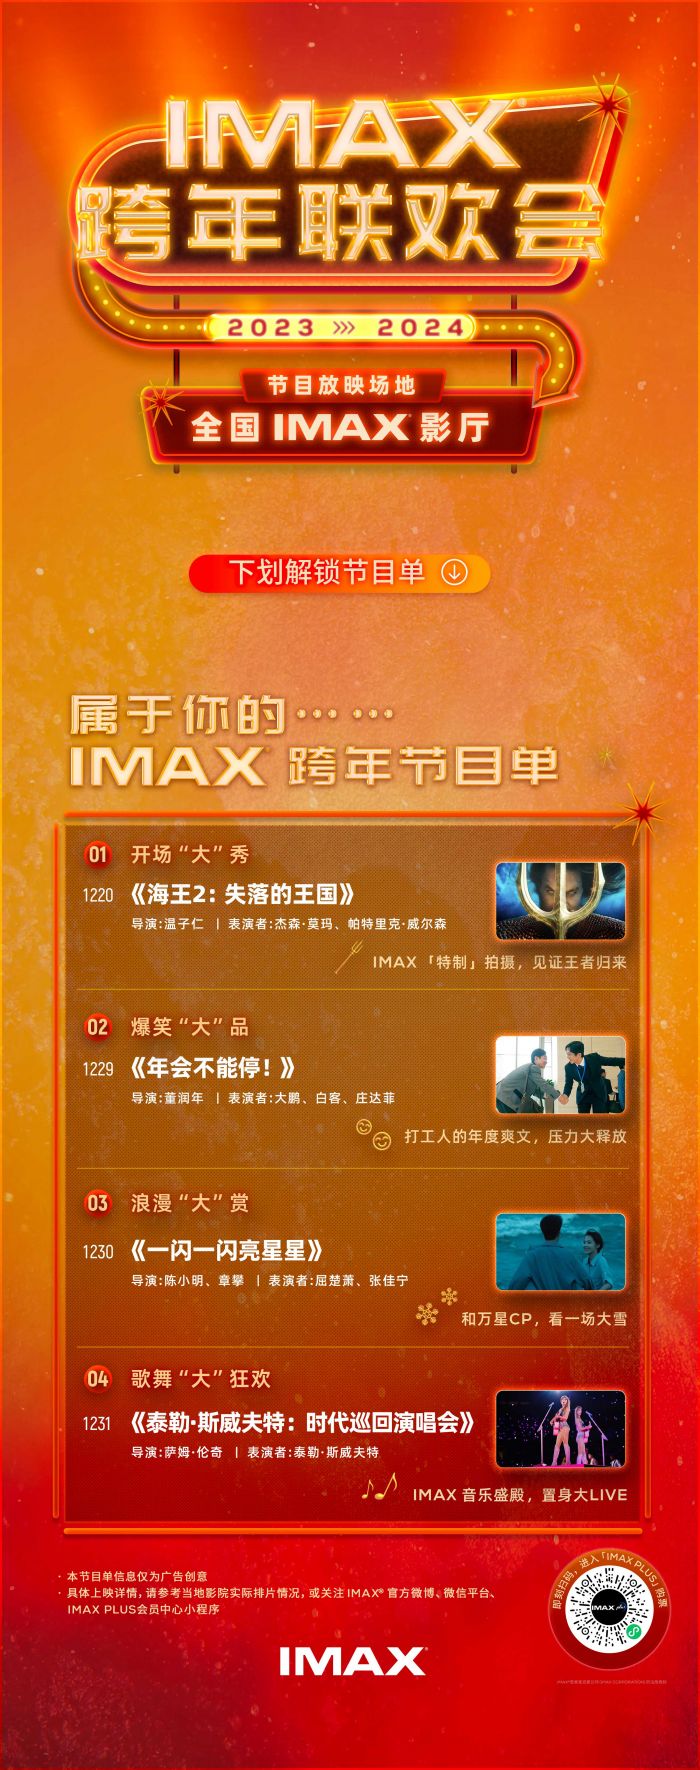 IMAX正式发布“IMAX跨年联欢会节目单” 海内外佳作集结银幕